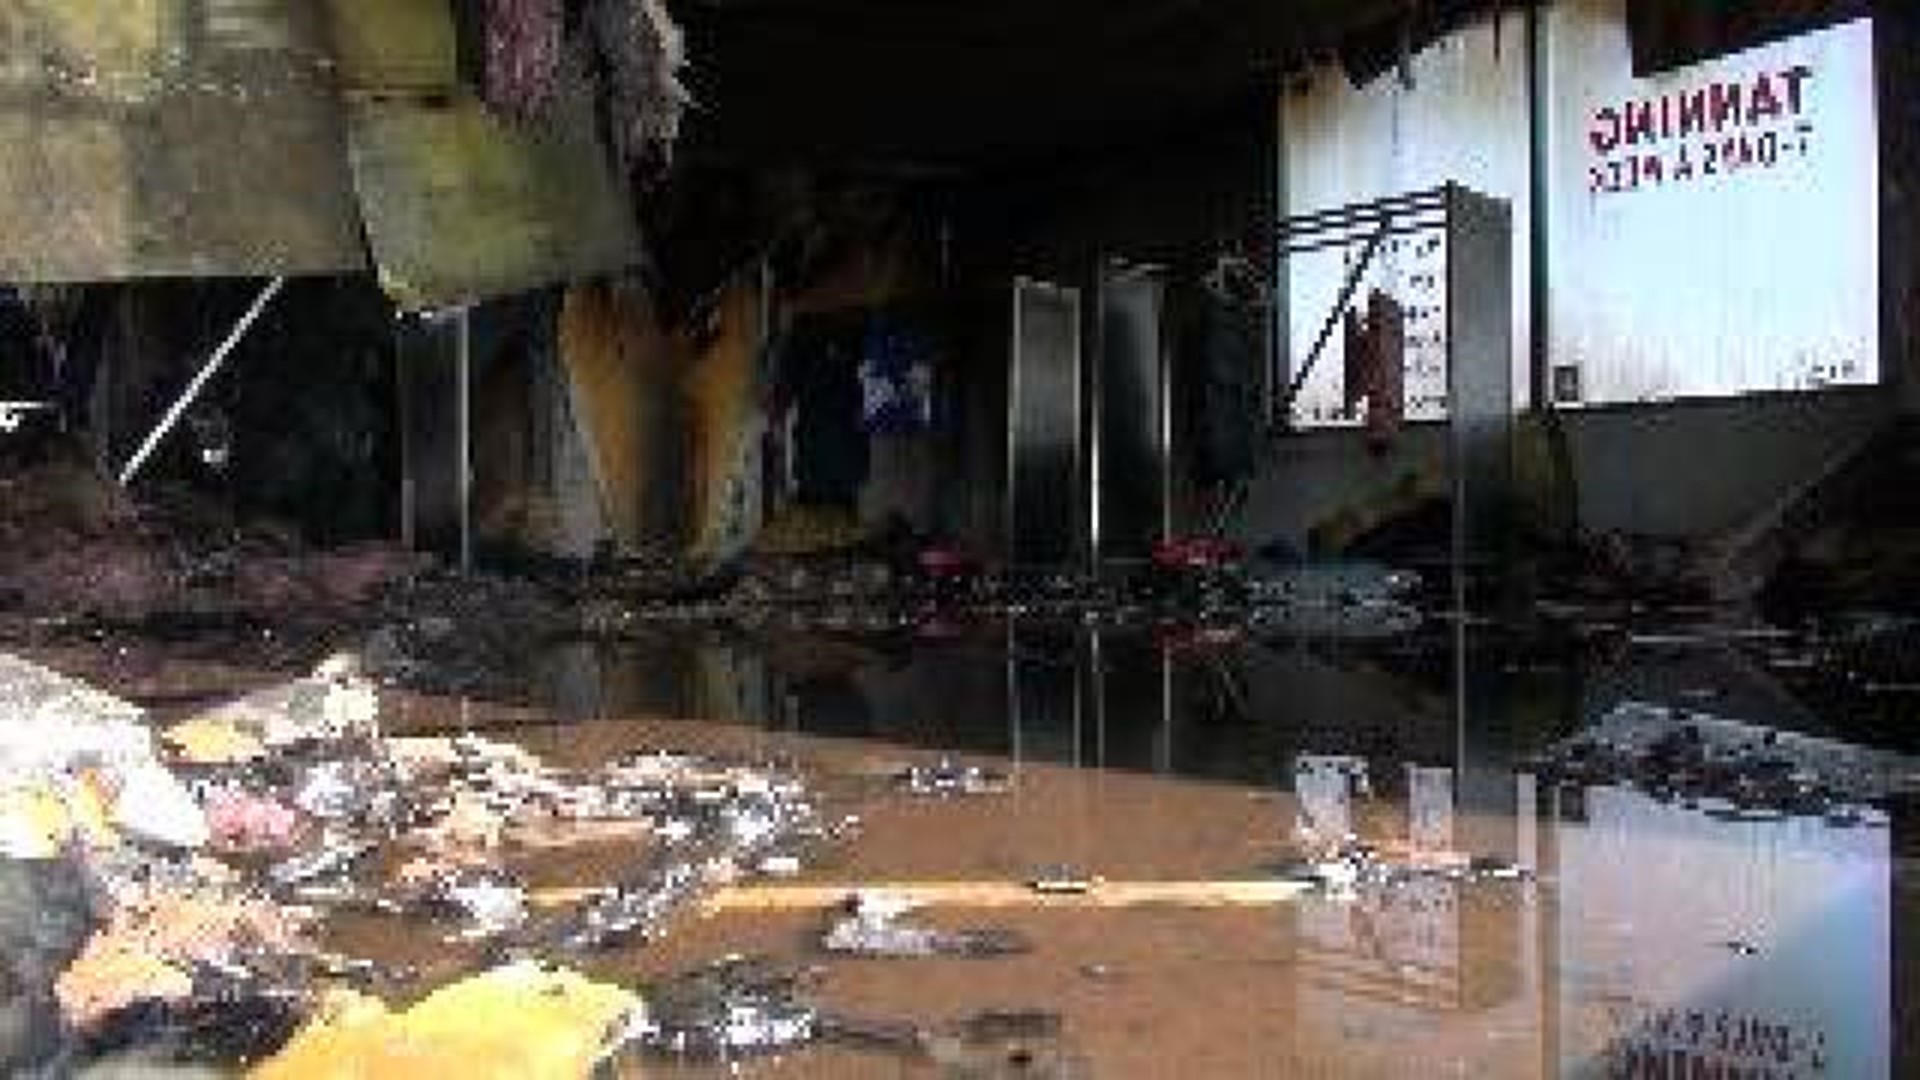 Fire Destroys Former Church; Congregation Saddened